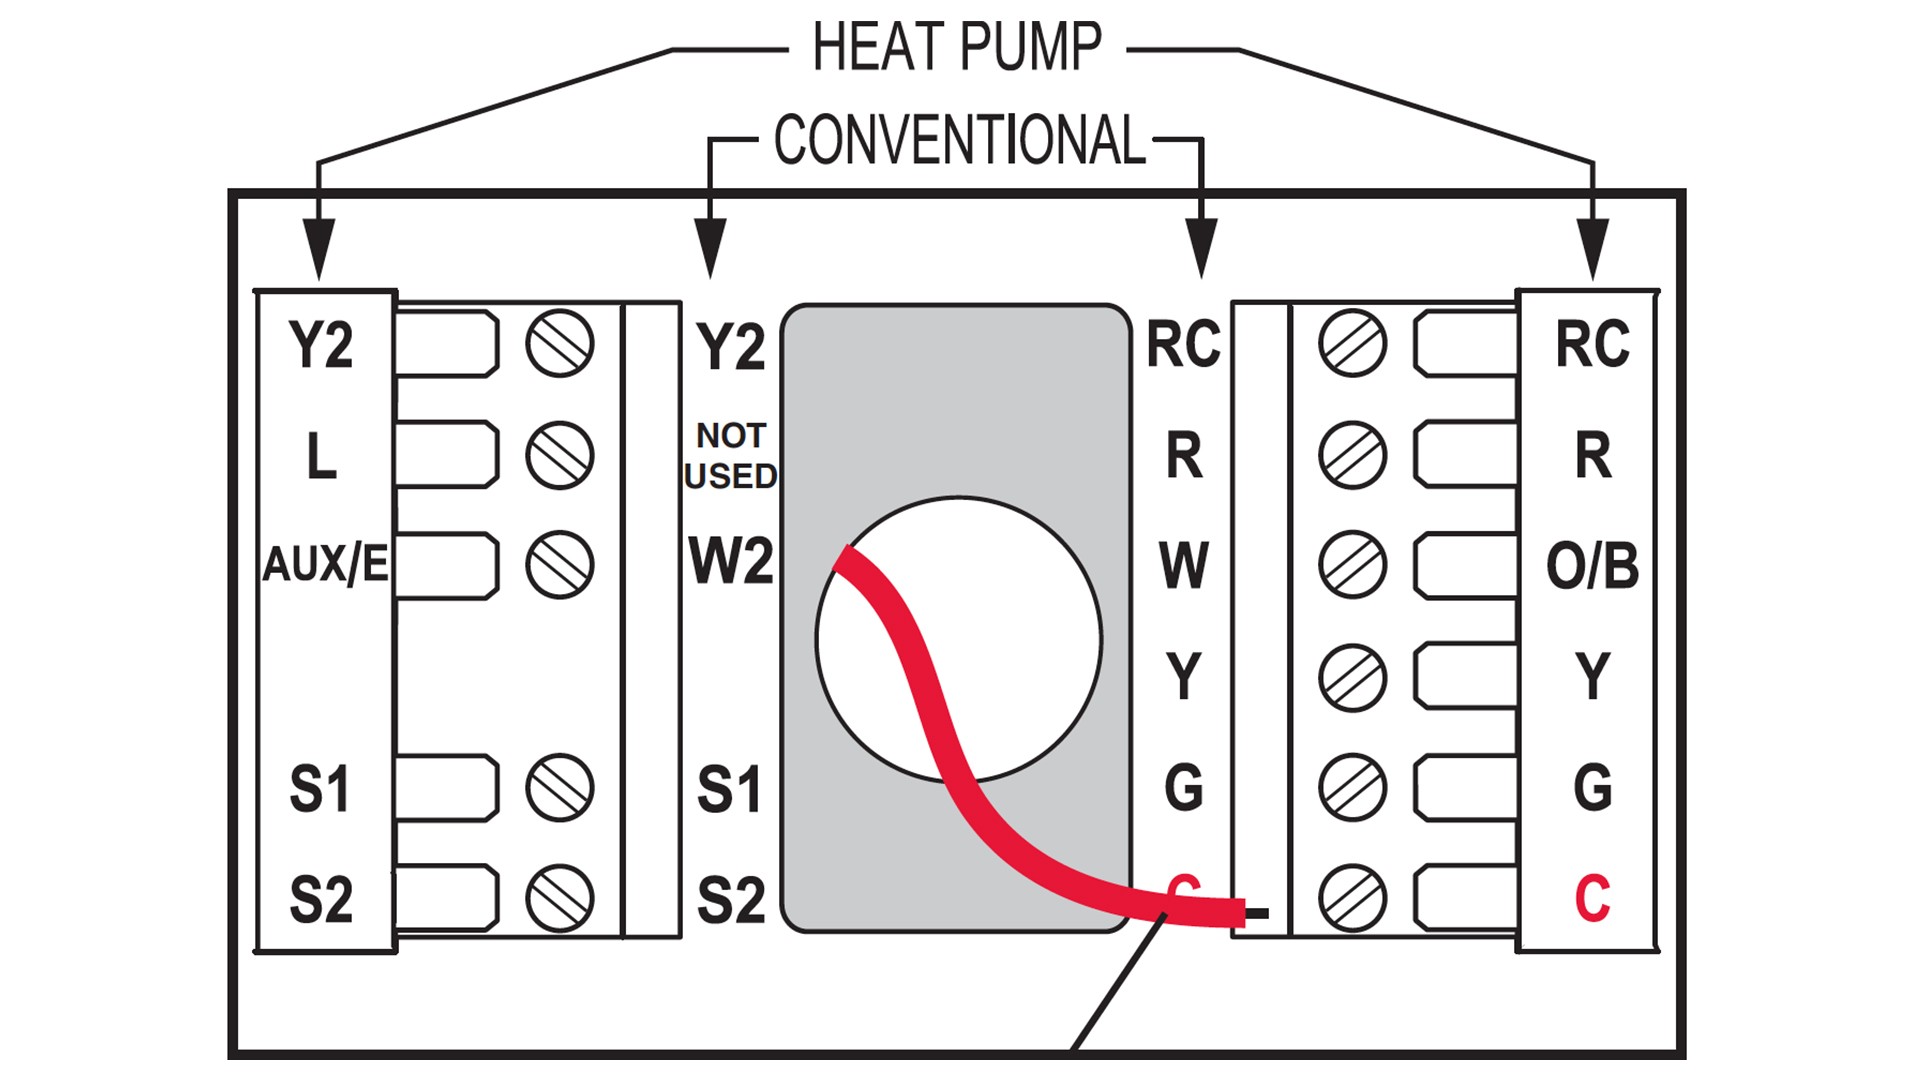 Heat Pump Wiring Diagram Honeywell thermostat Wiring Diagram Wire Diagram for Heat Pump Of Heat Pump Wiring Diagram